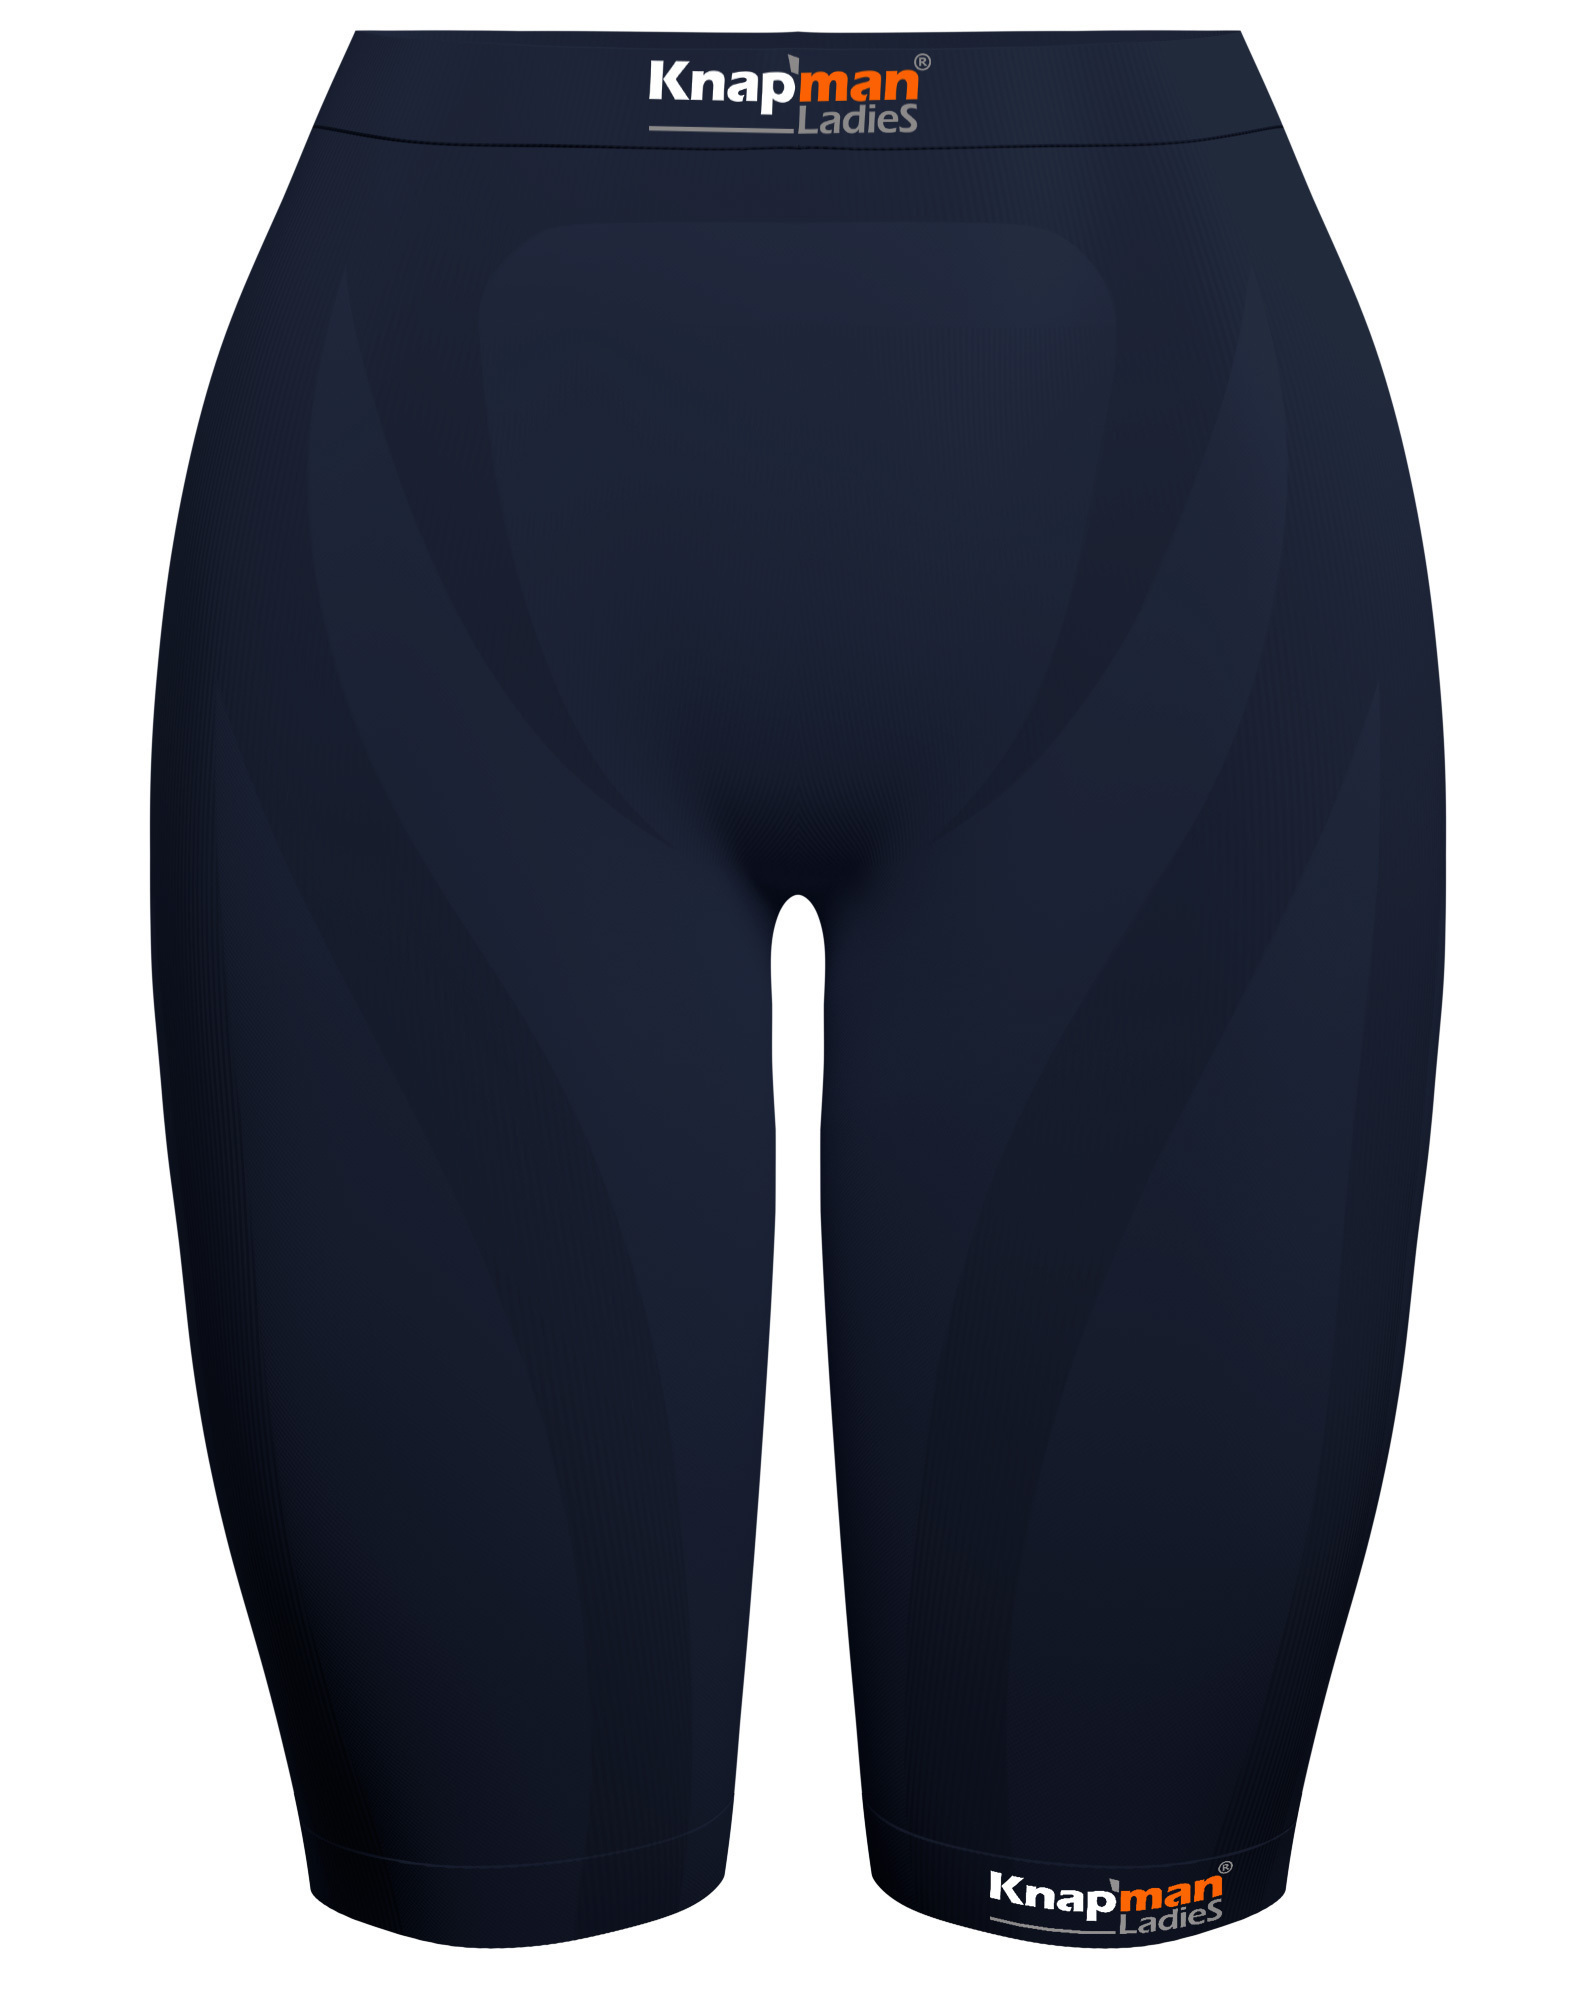 Knap'man Women's Compression Shorts Navy Blue - 45%